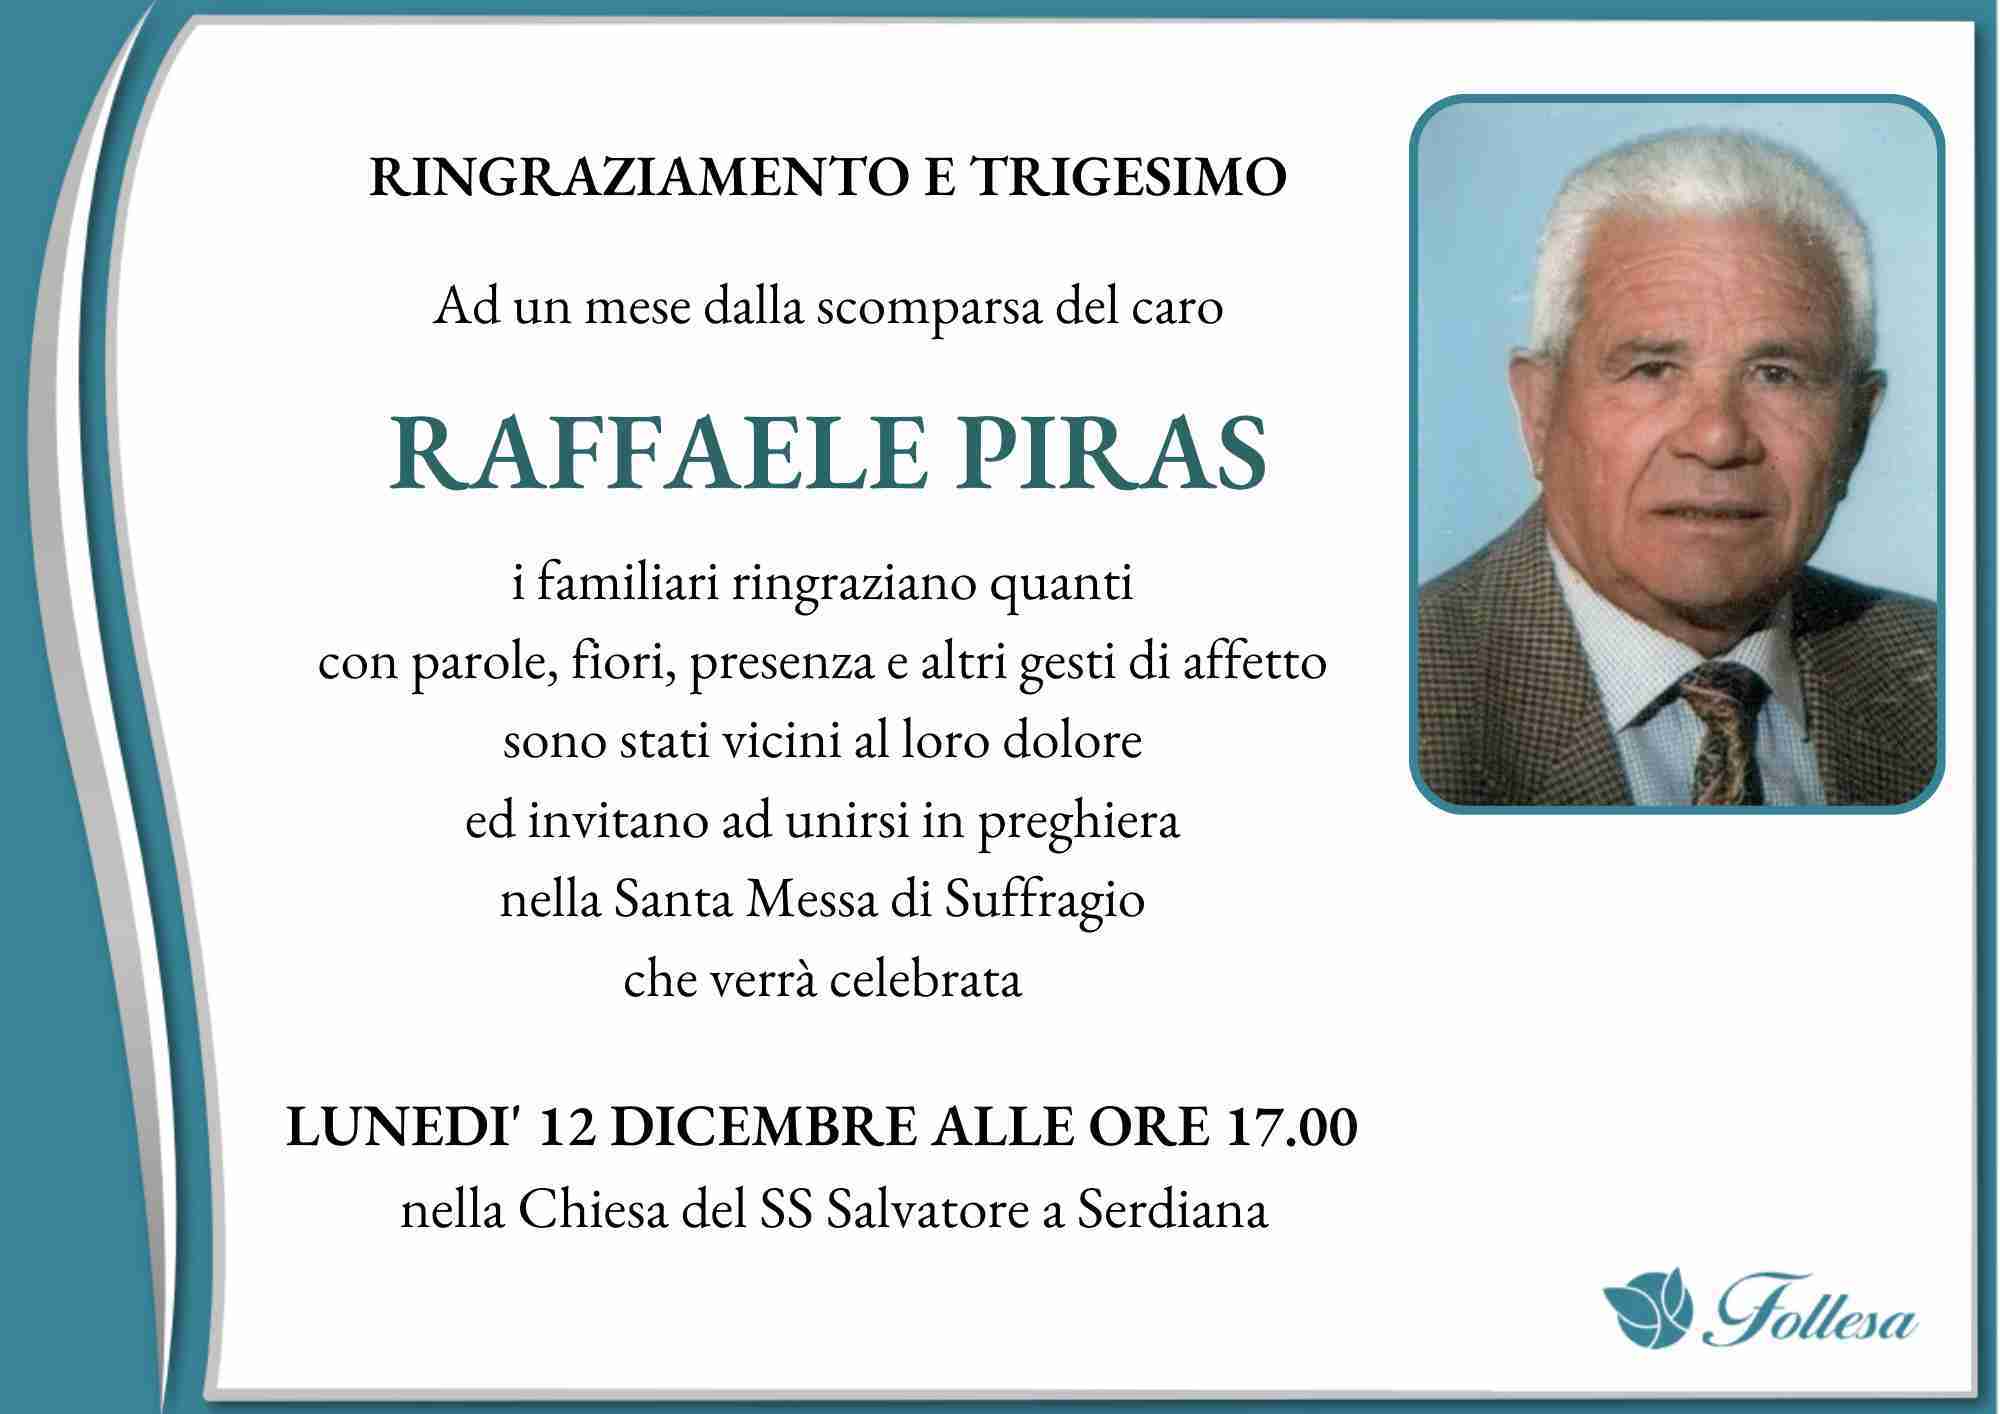 Raffaele Piras